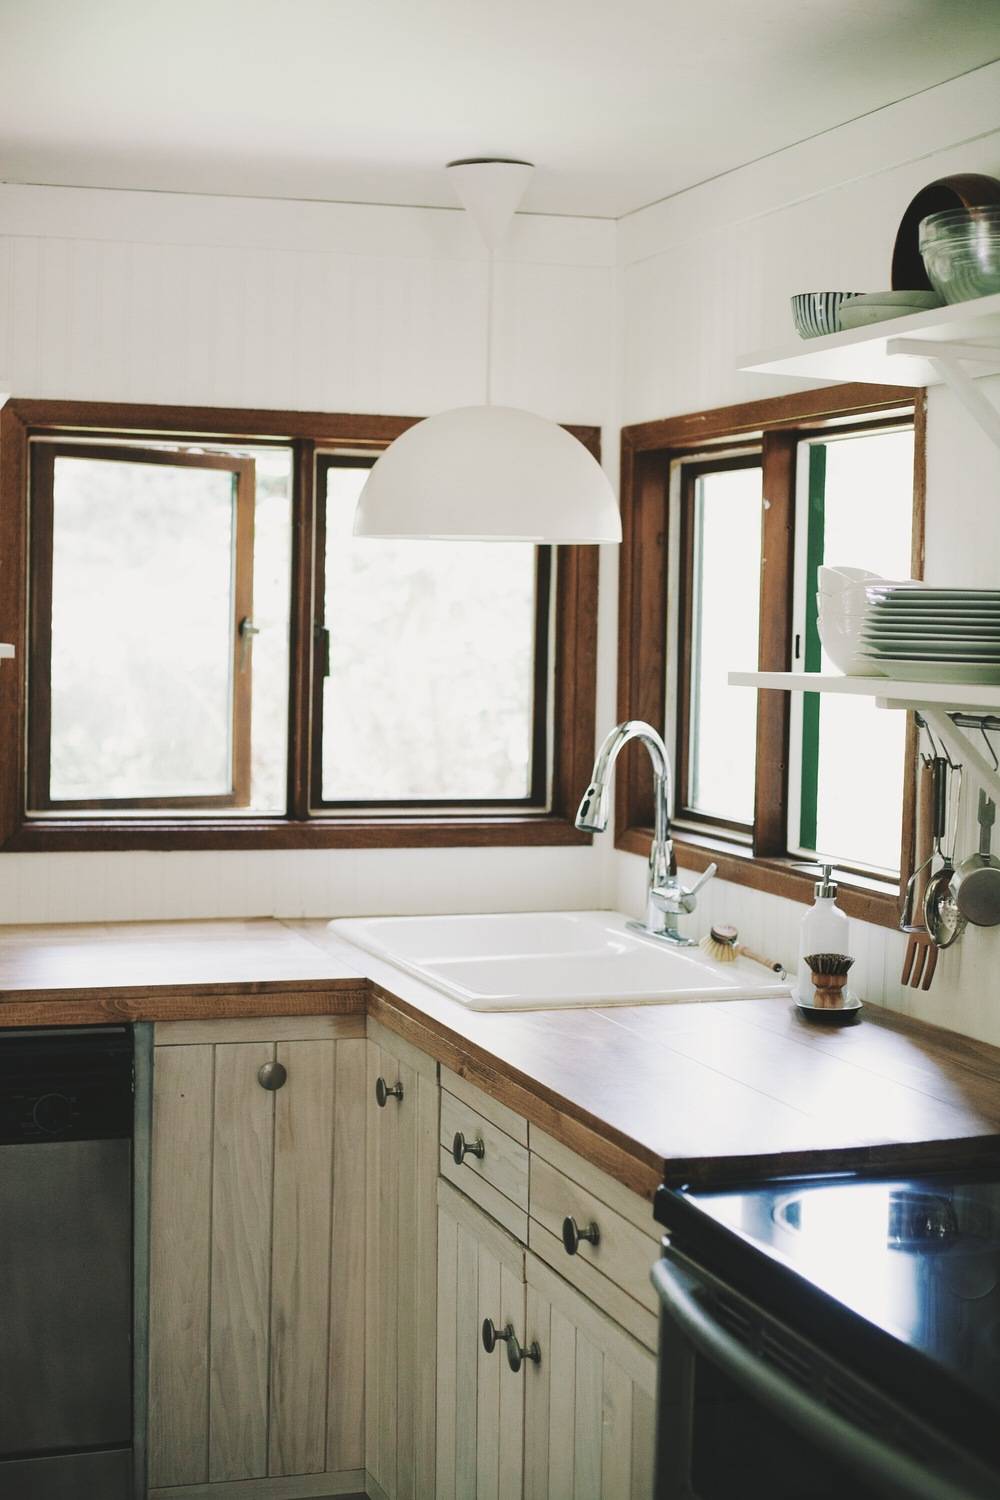 Kitchen sink with pendant light overhead